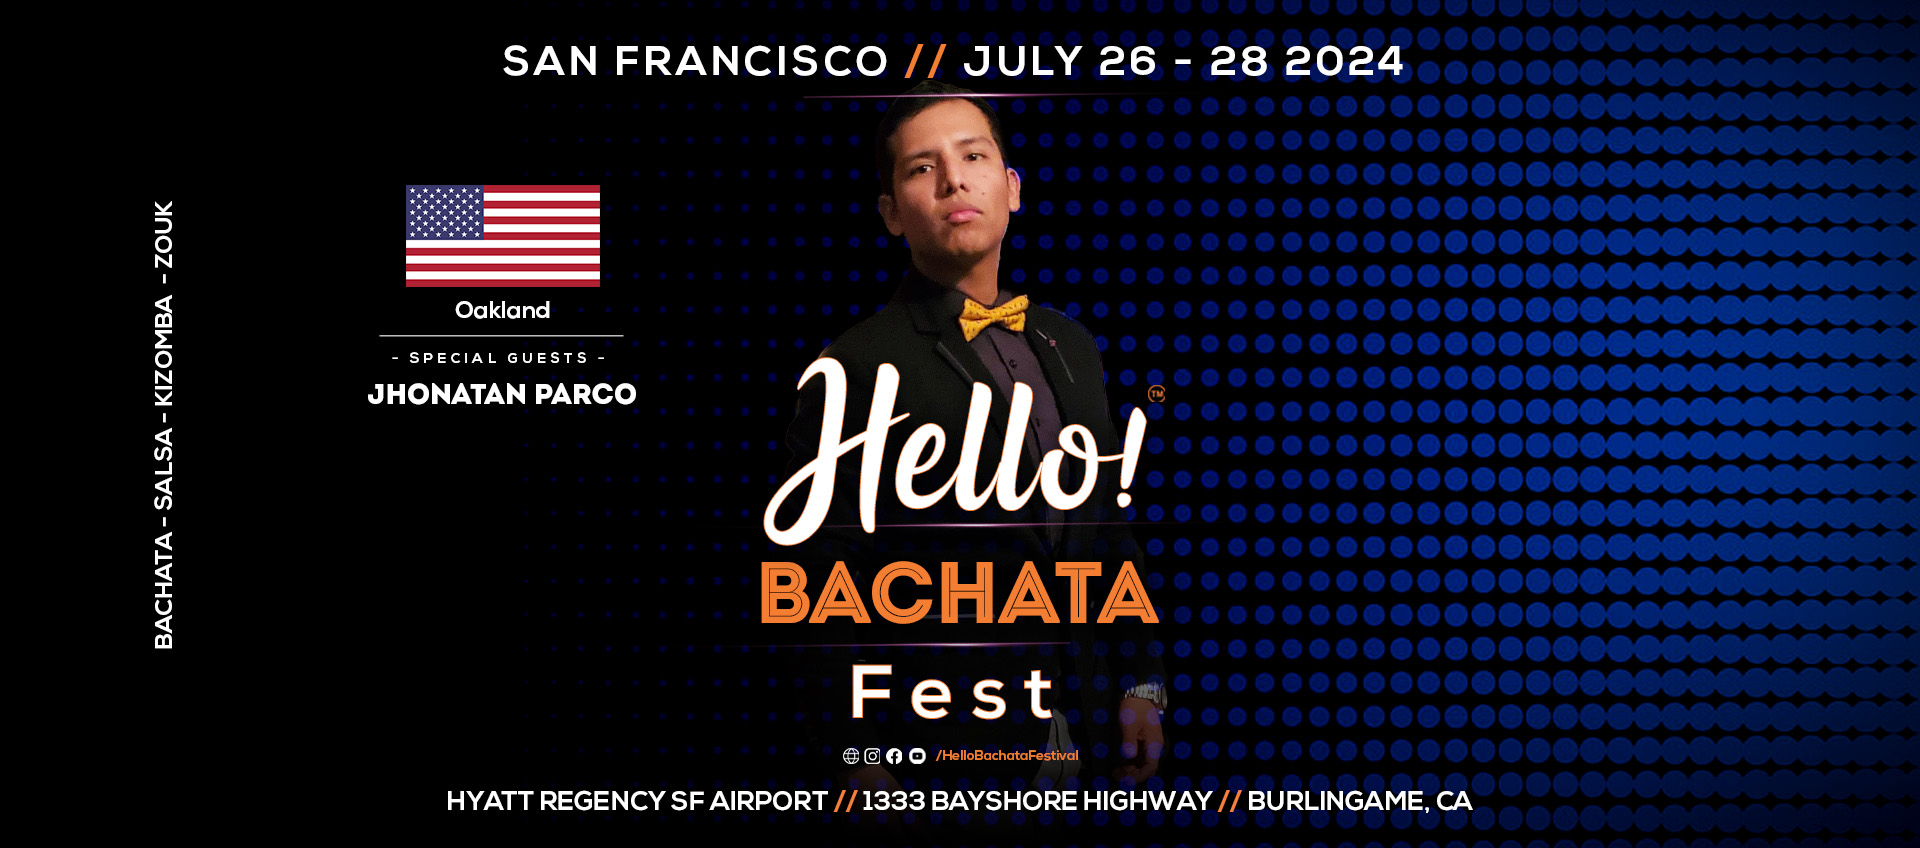 Hello! Bachata Fest - Jhonatan Parco - Bachata Takeover